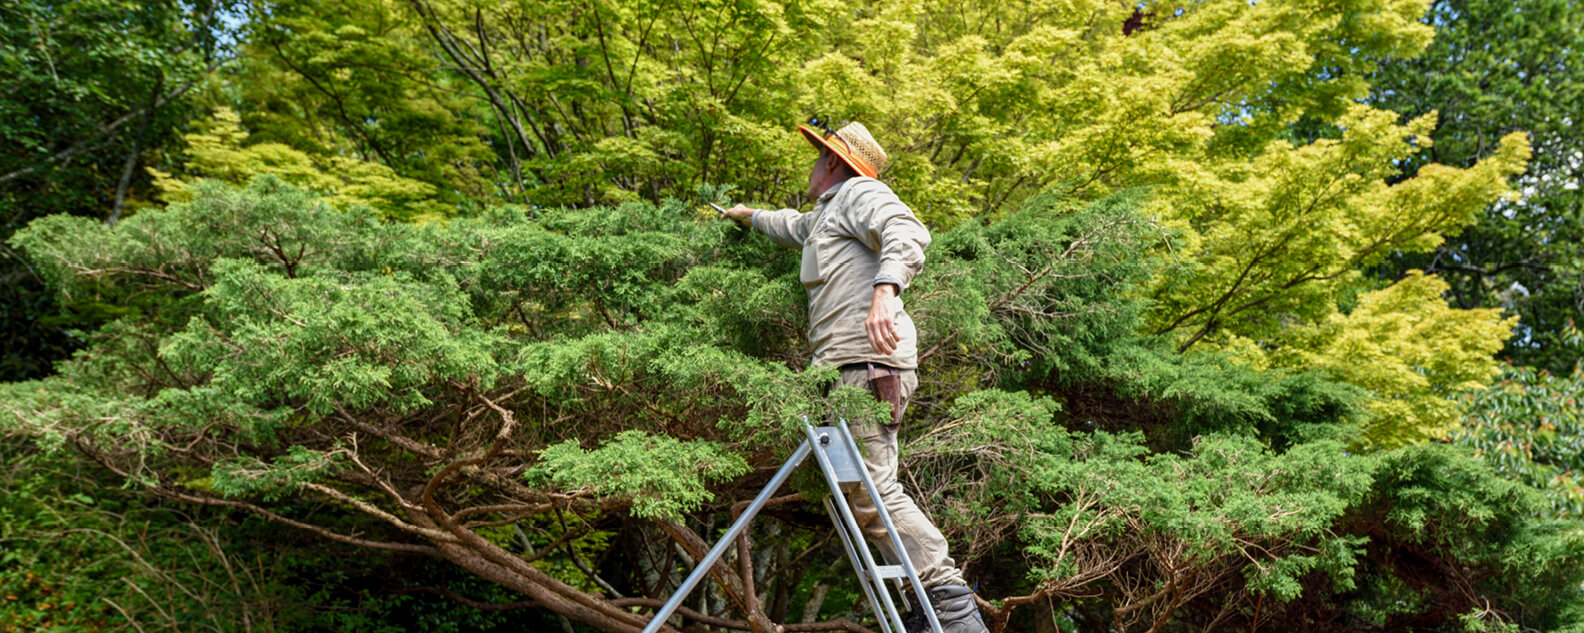 Arborist on a ladder tending a tree